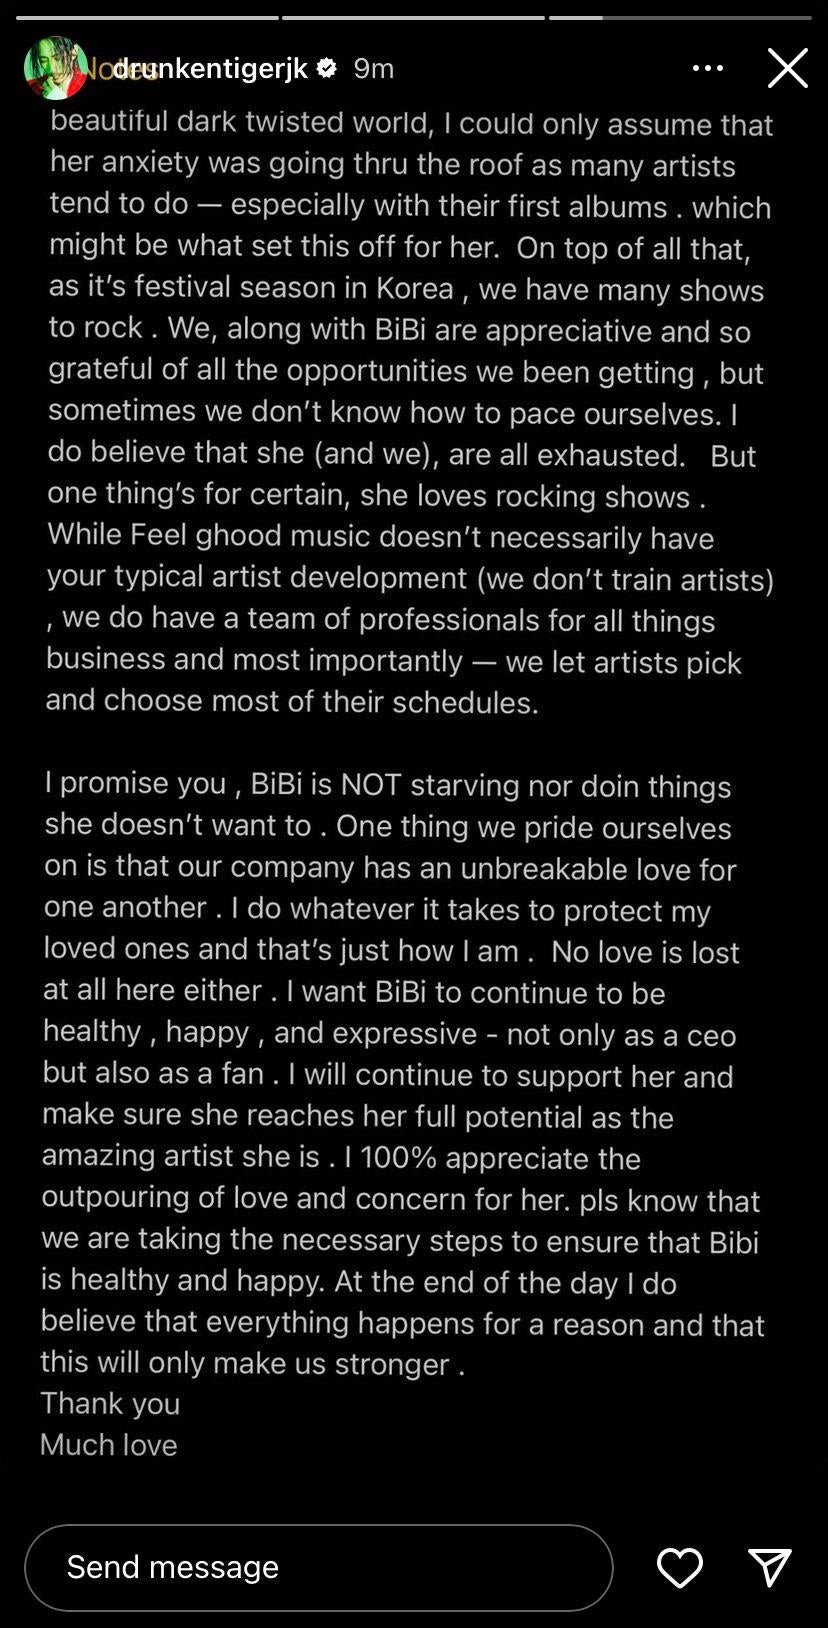 Tiger JK posts a heartfelt statement on behalf of Feel Ghood Music ...